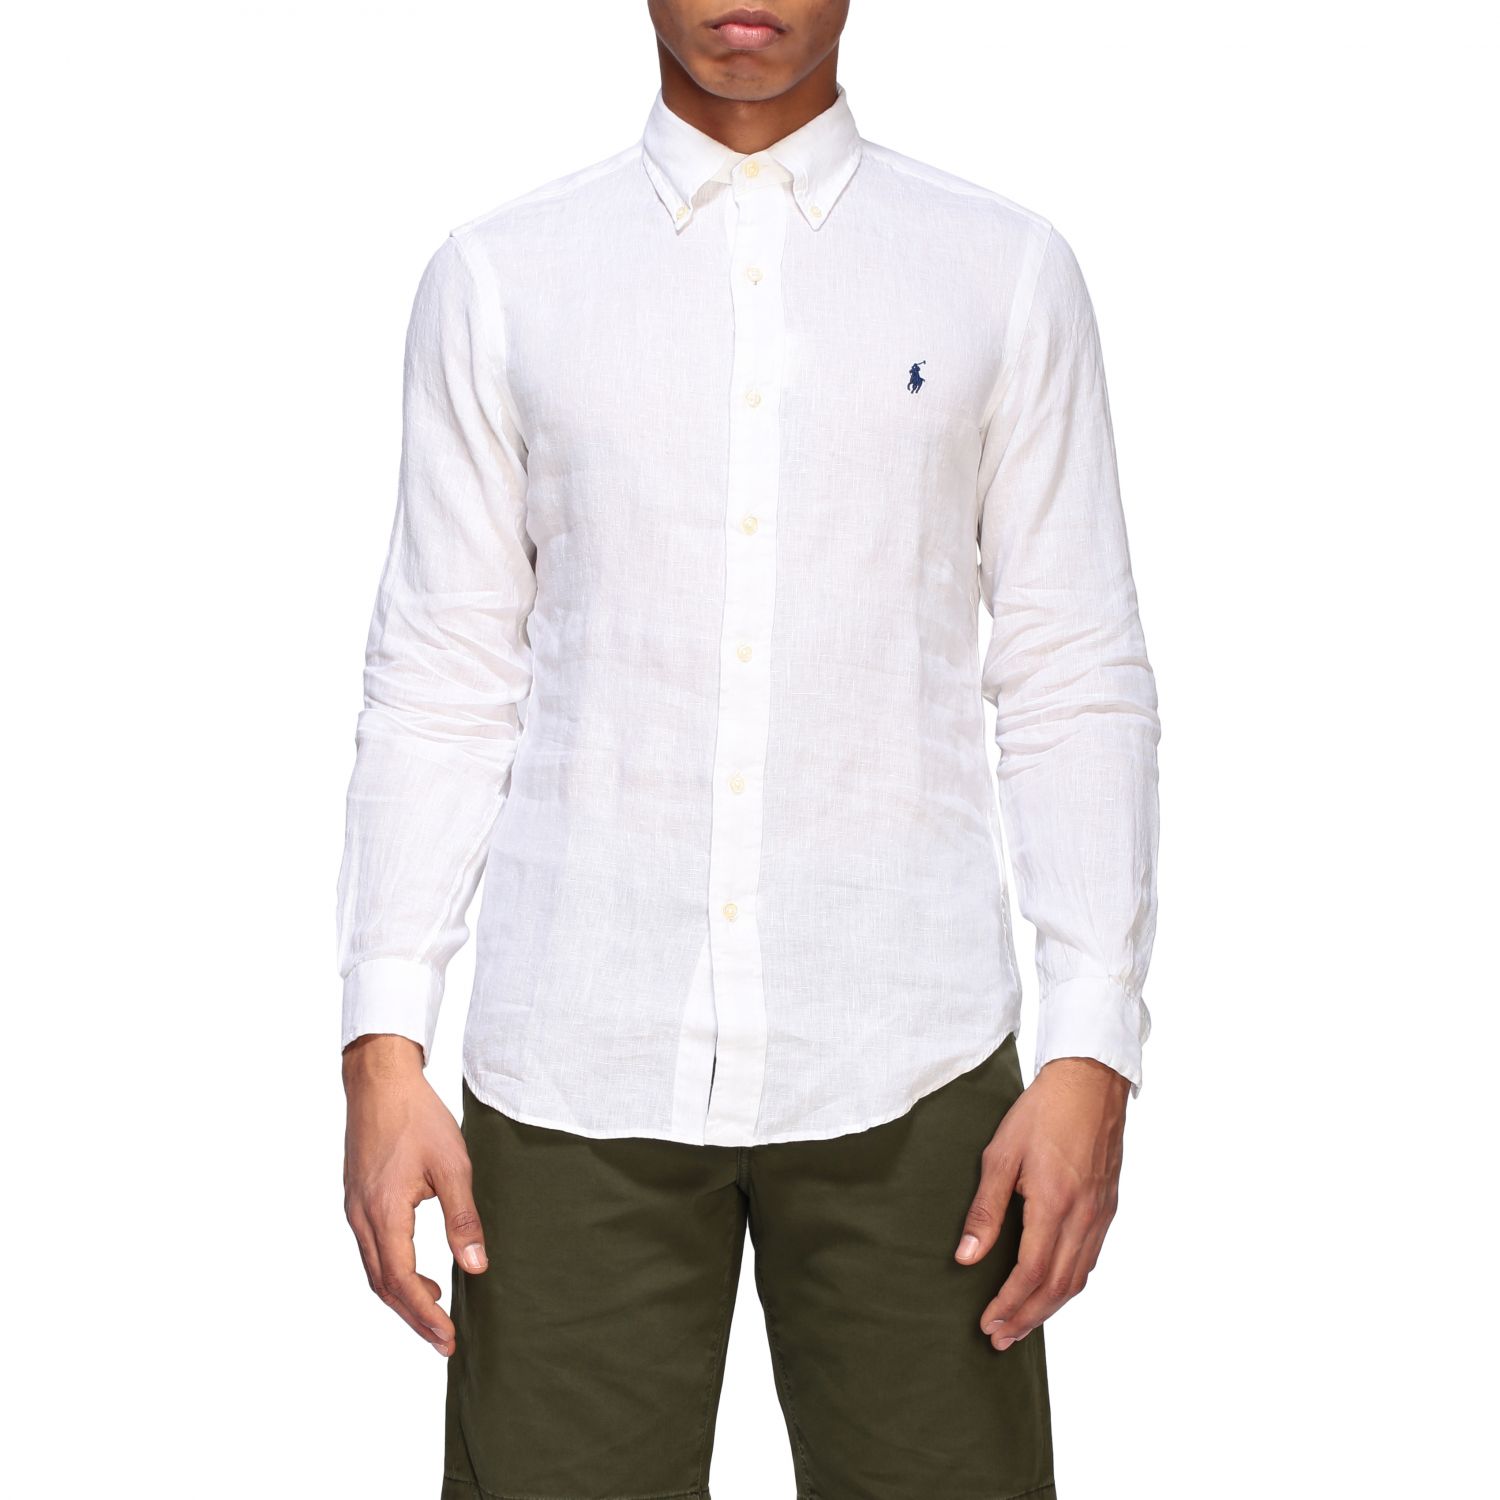 Polo Ralph Lauren Outlet: shirt with button-down collar - White | Polo ...